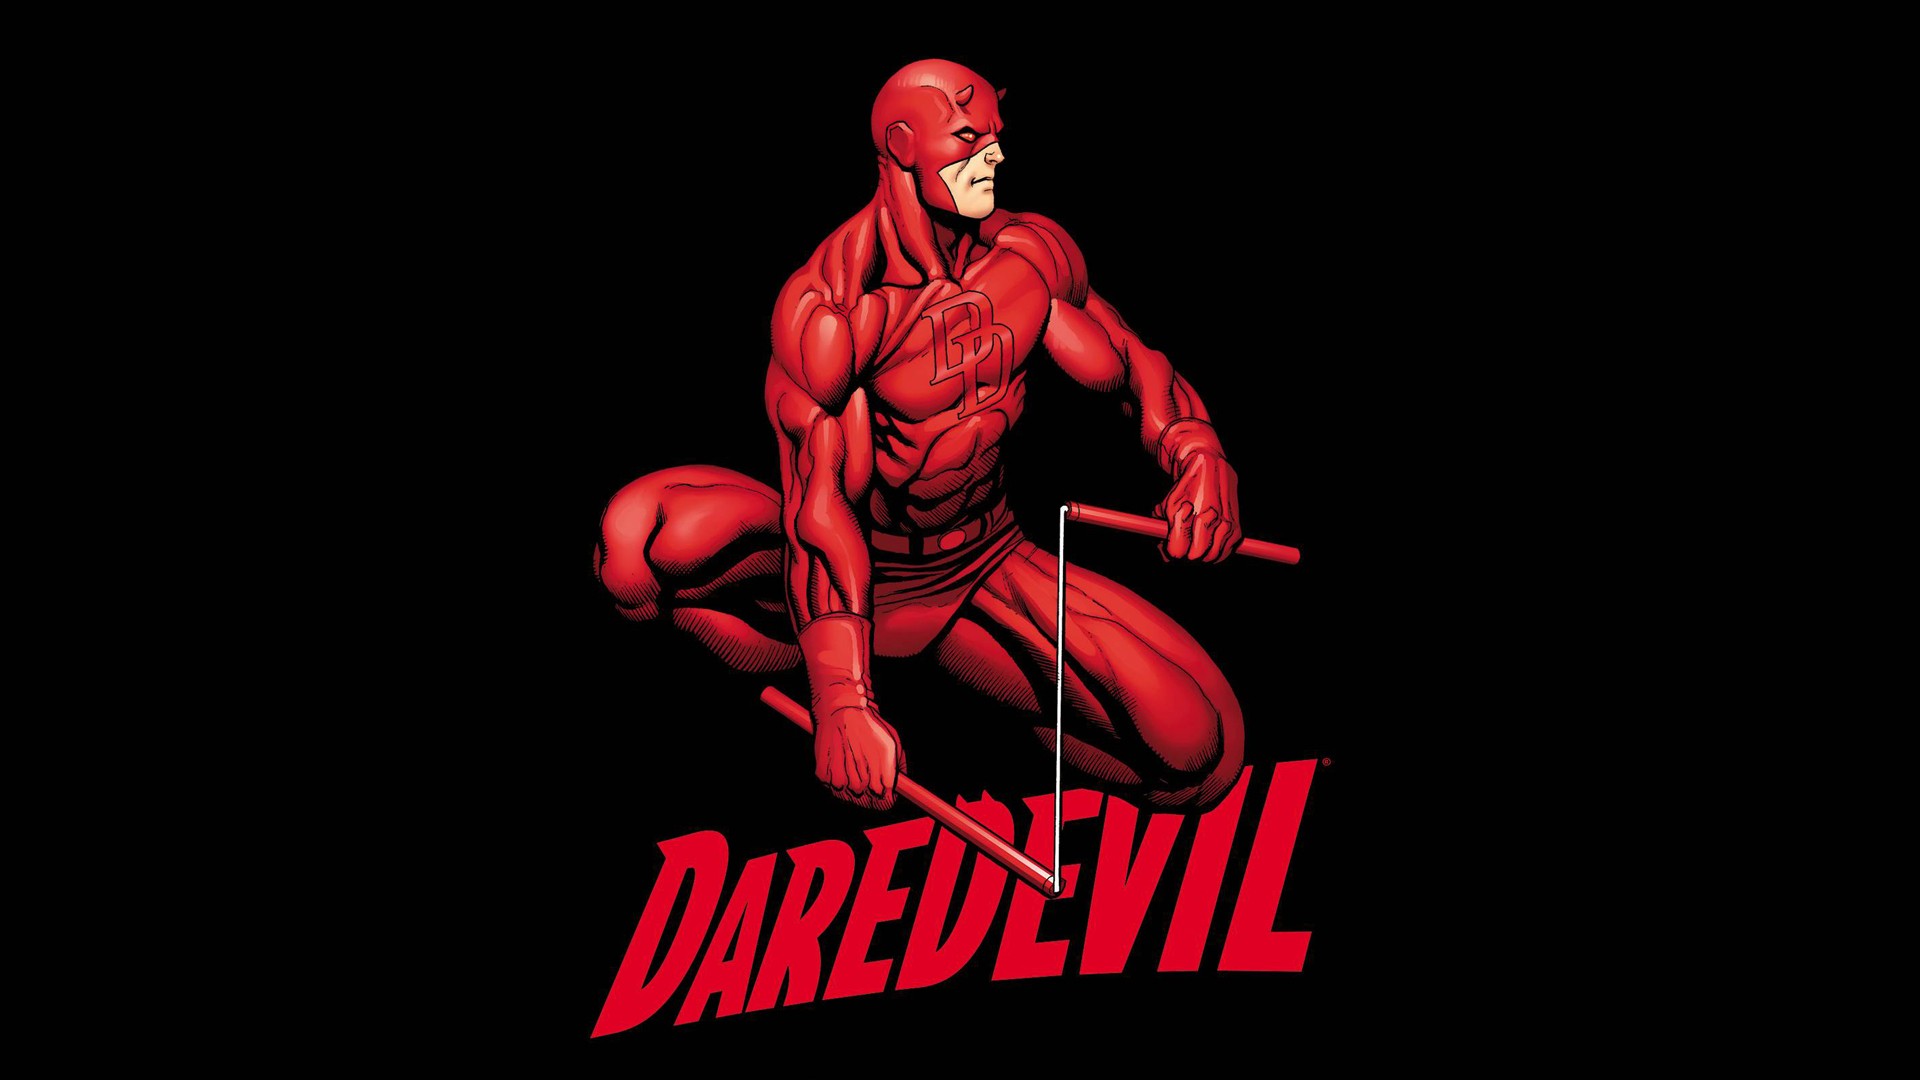 Daredevil, Marvel Comics, Superhero, Black Background, Comic Art, Mask, Costumes, Comics, Comic Books, Matt Murdock Wallpaper